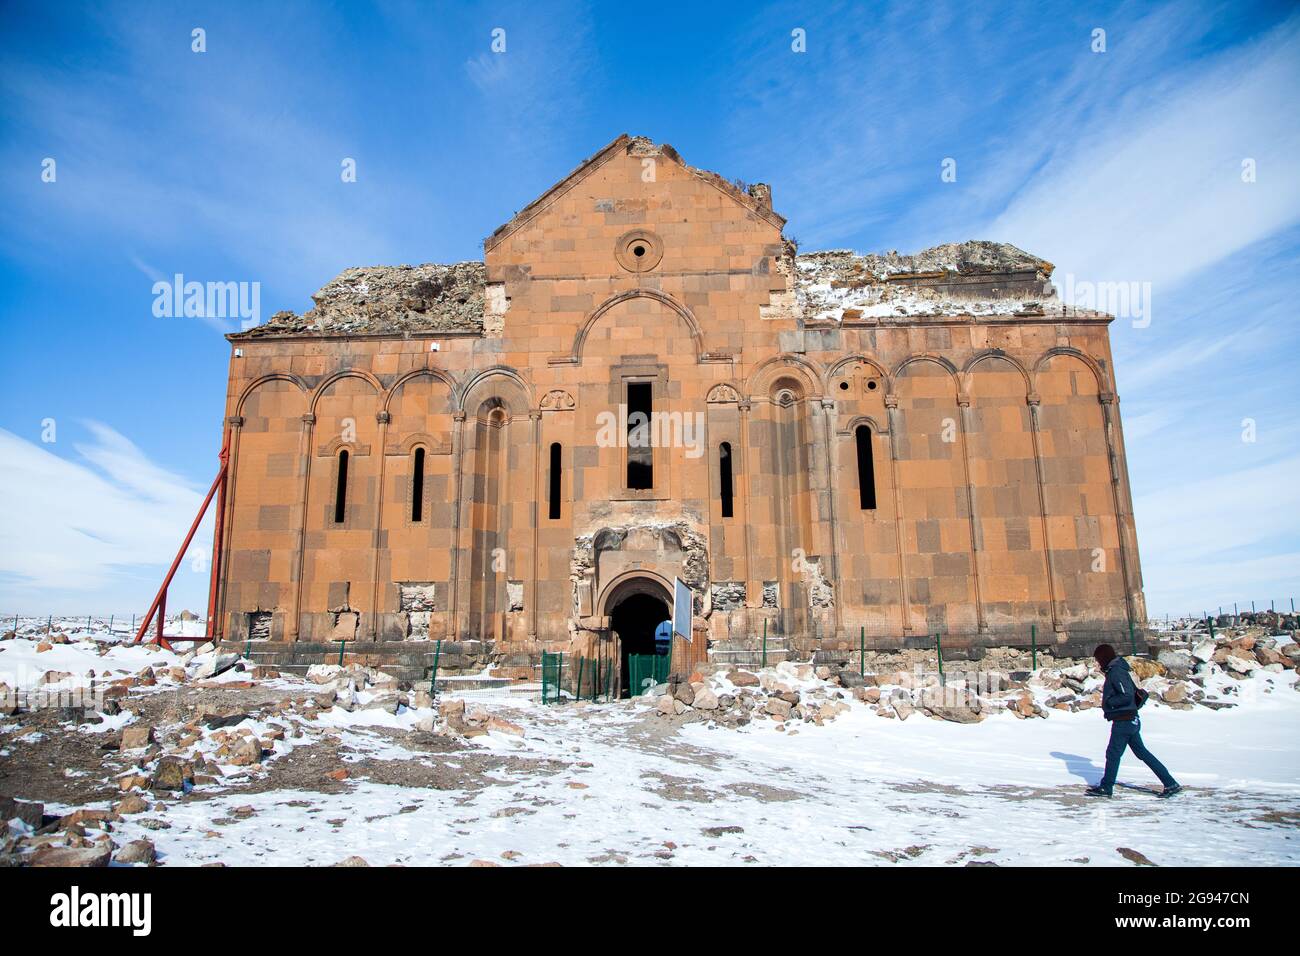 Kars,Turchia - 01/28/2016: Rovine ANI, Ani è una città armena medievale in rovina e disabitata situata nella provincia turca di Kars Foto Stock